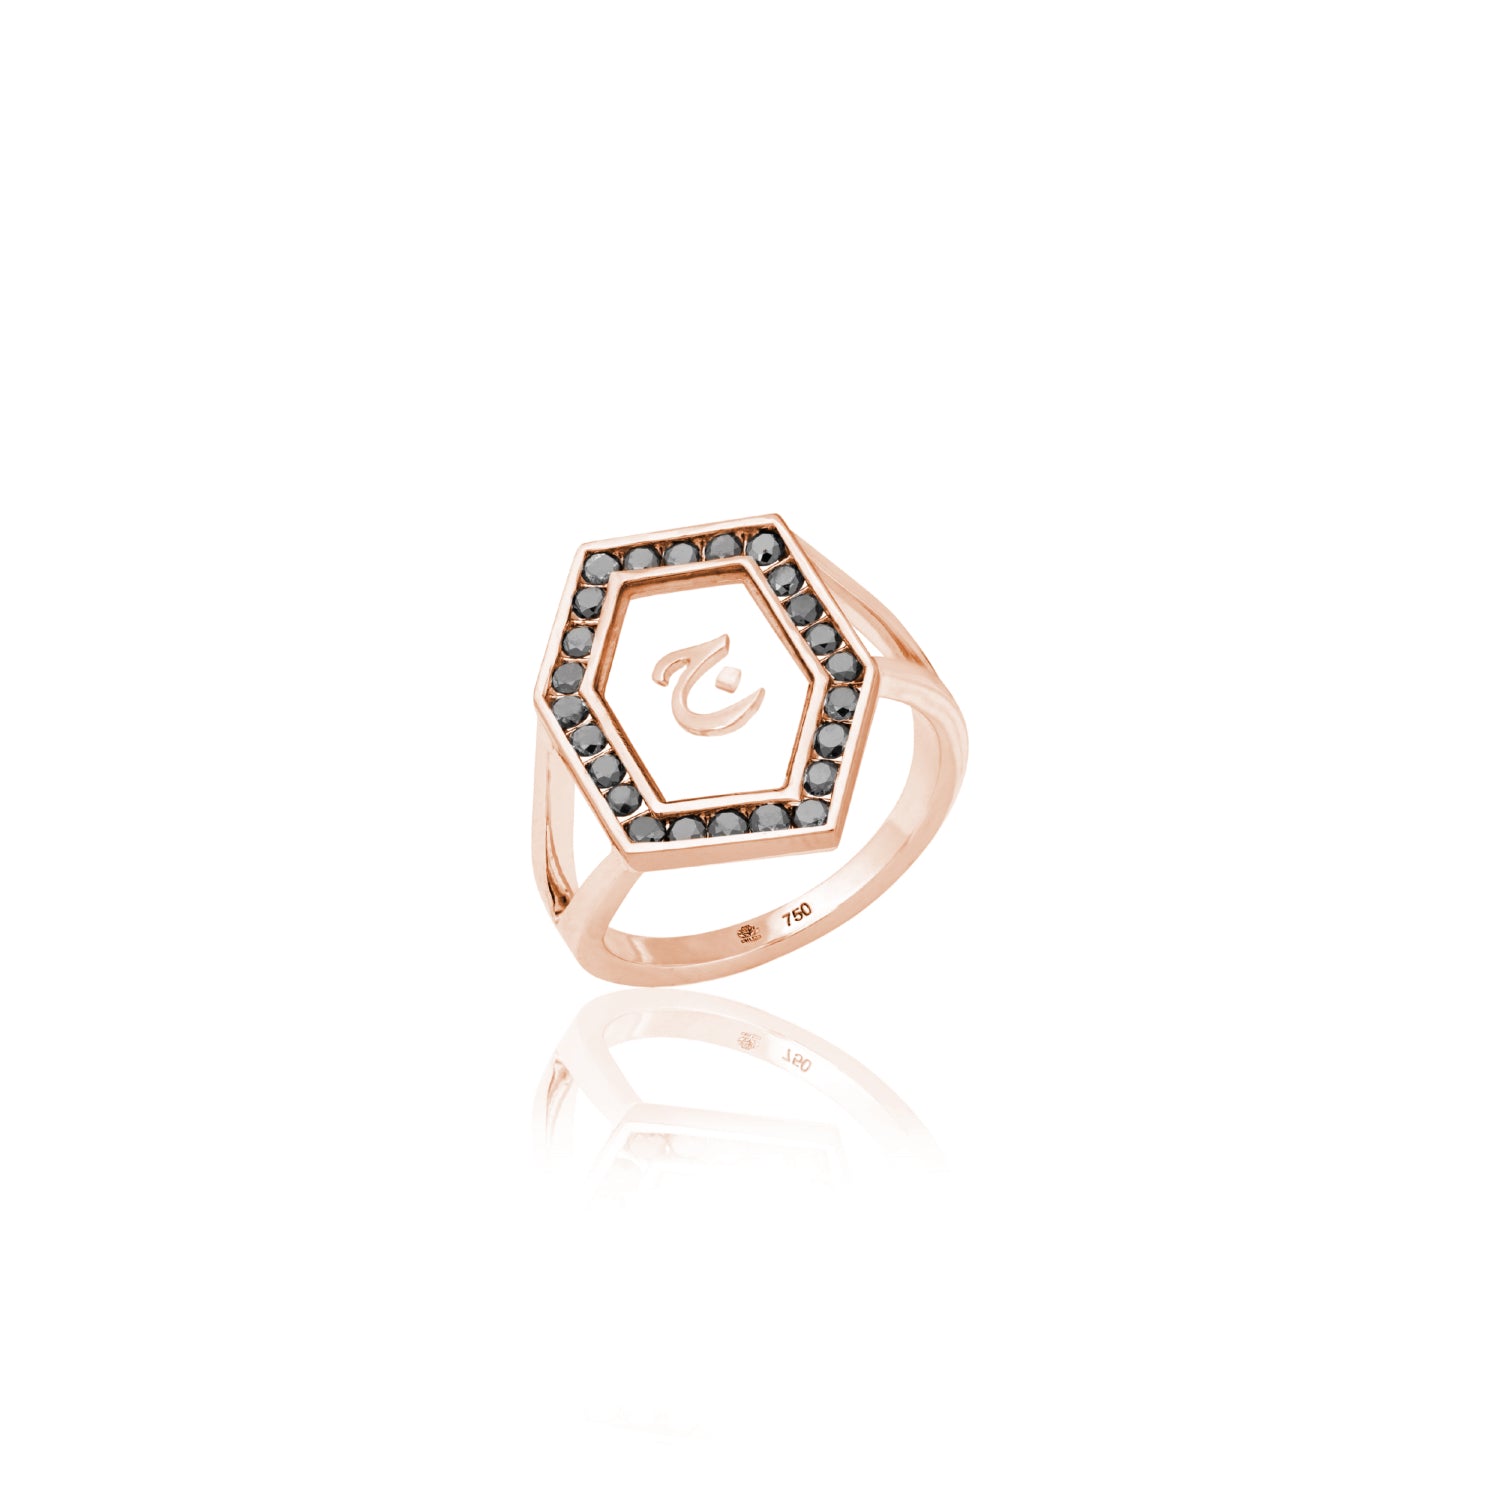 Qamoos 1.0 Letter ج Black Diamond Ring in Rose Gold